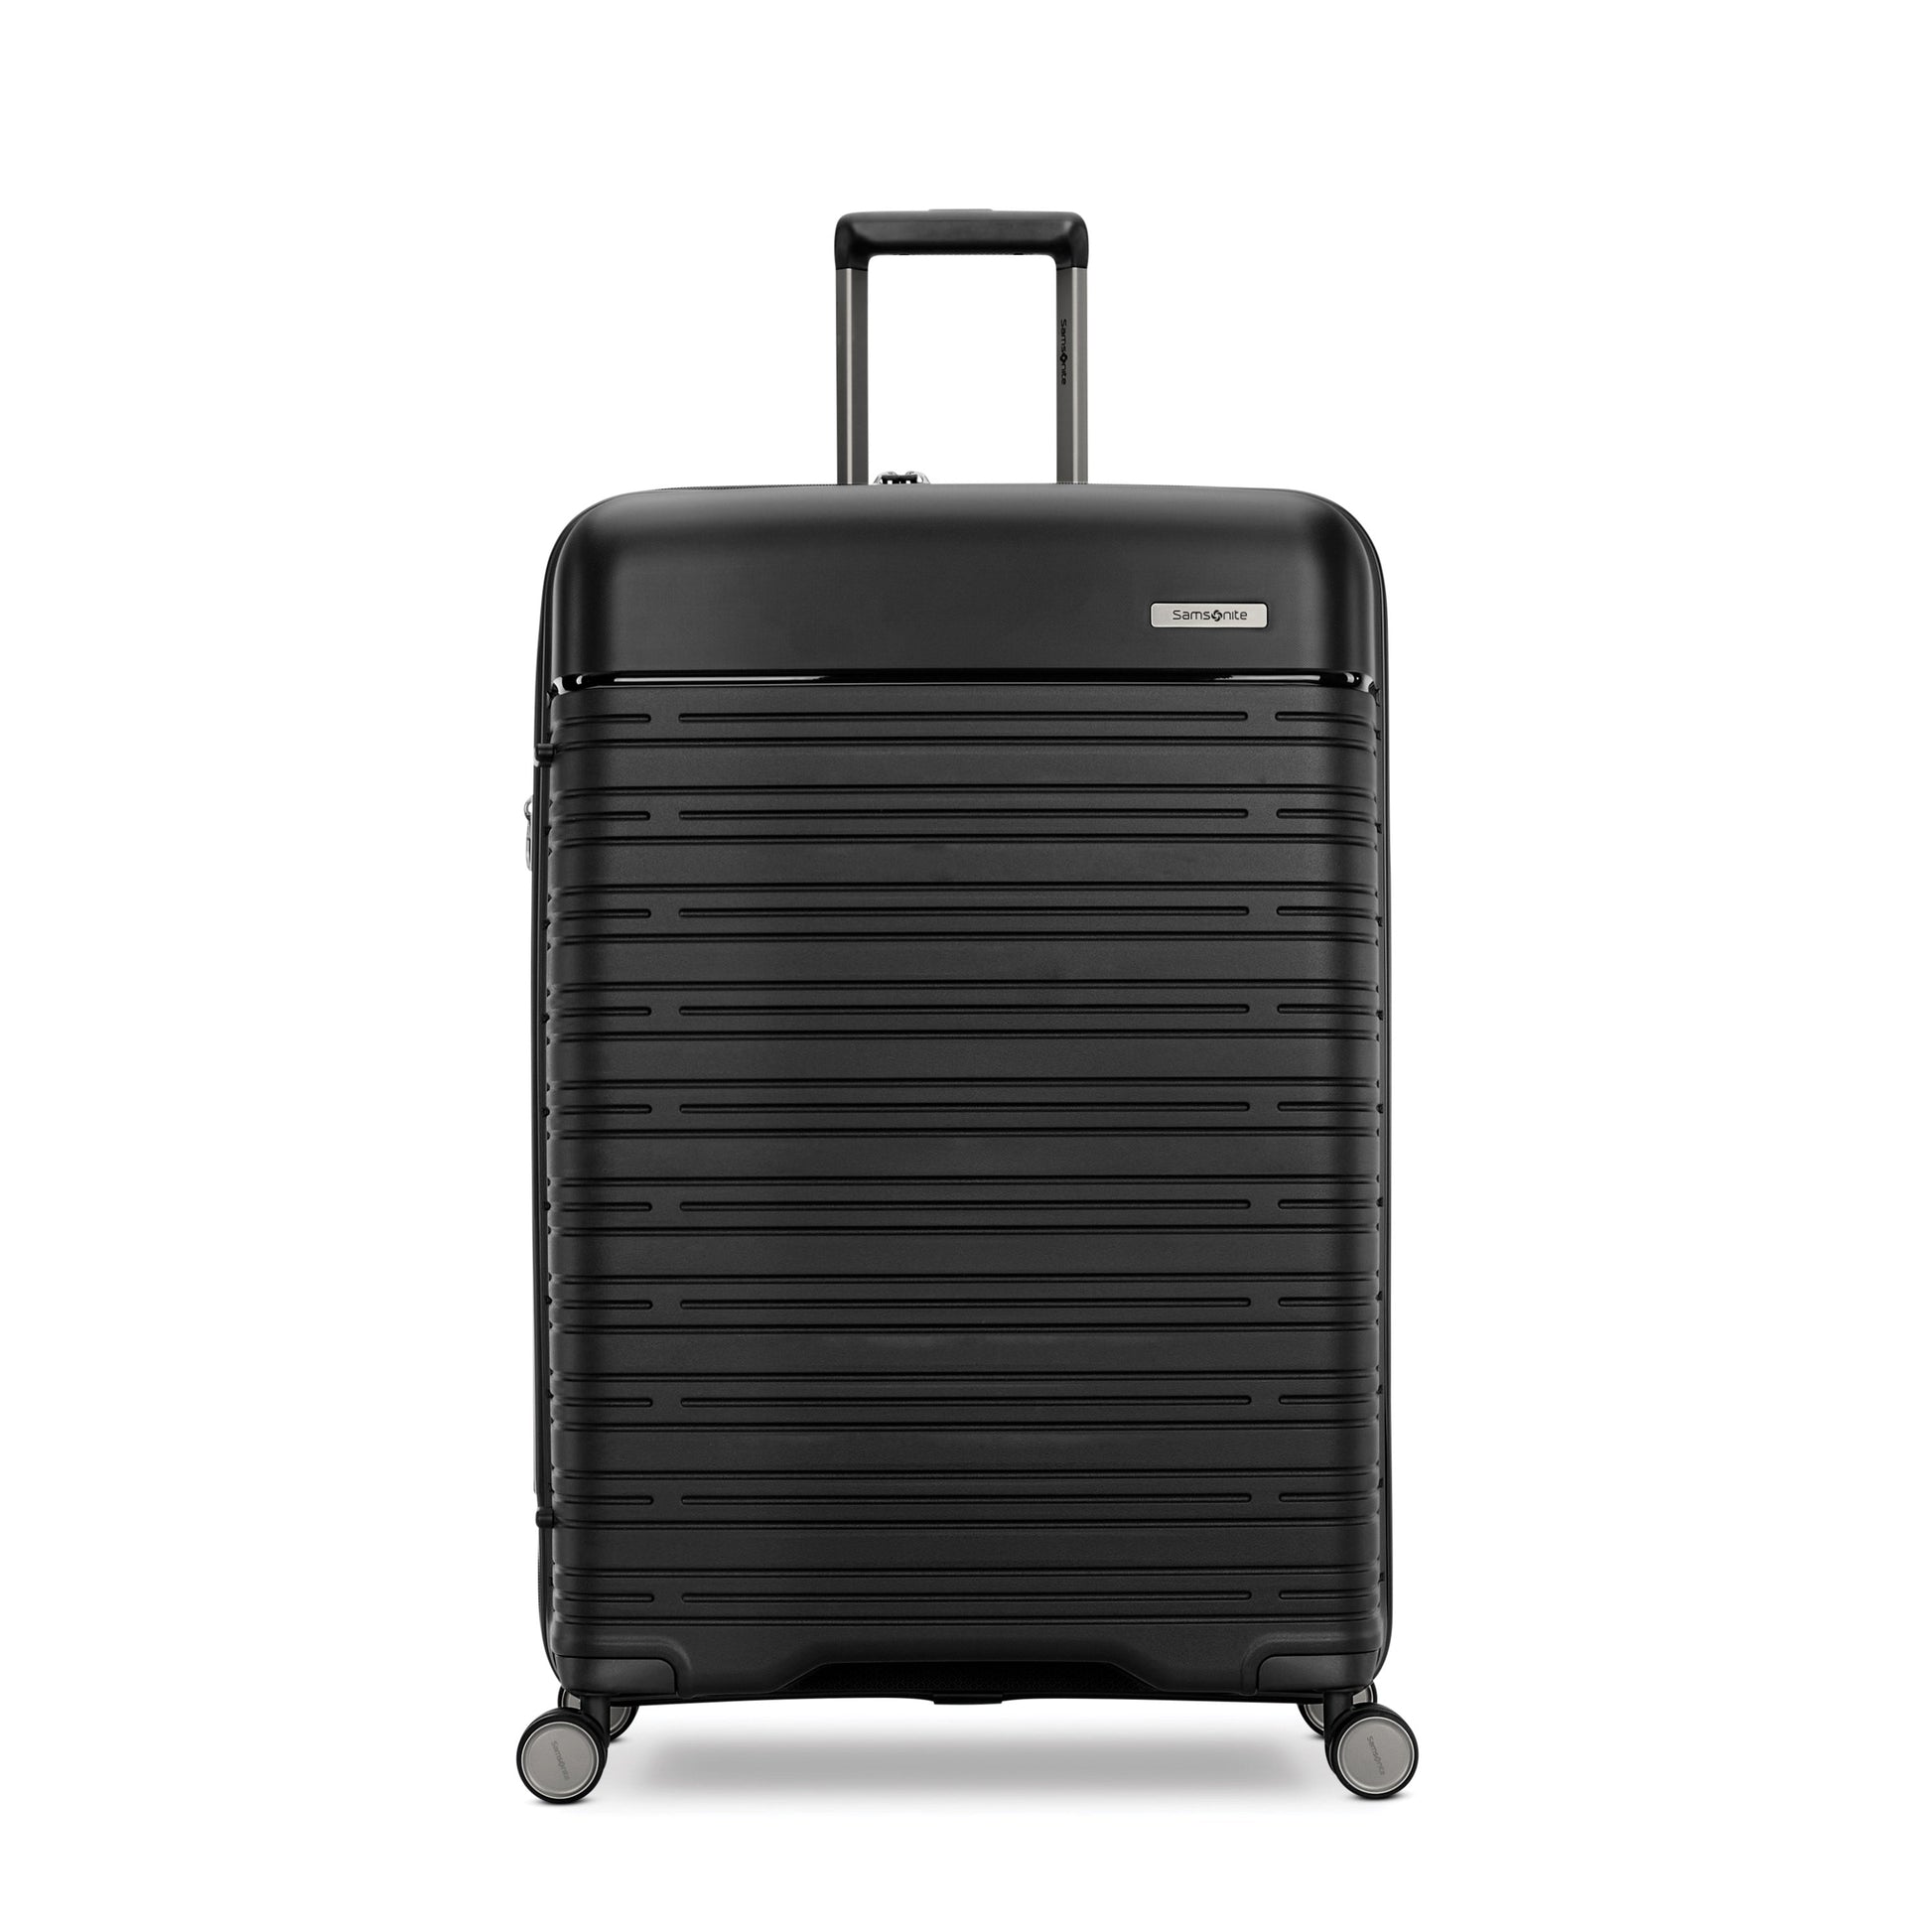 Samsonite Elevation Plus Large Expandable Spinner Luggage